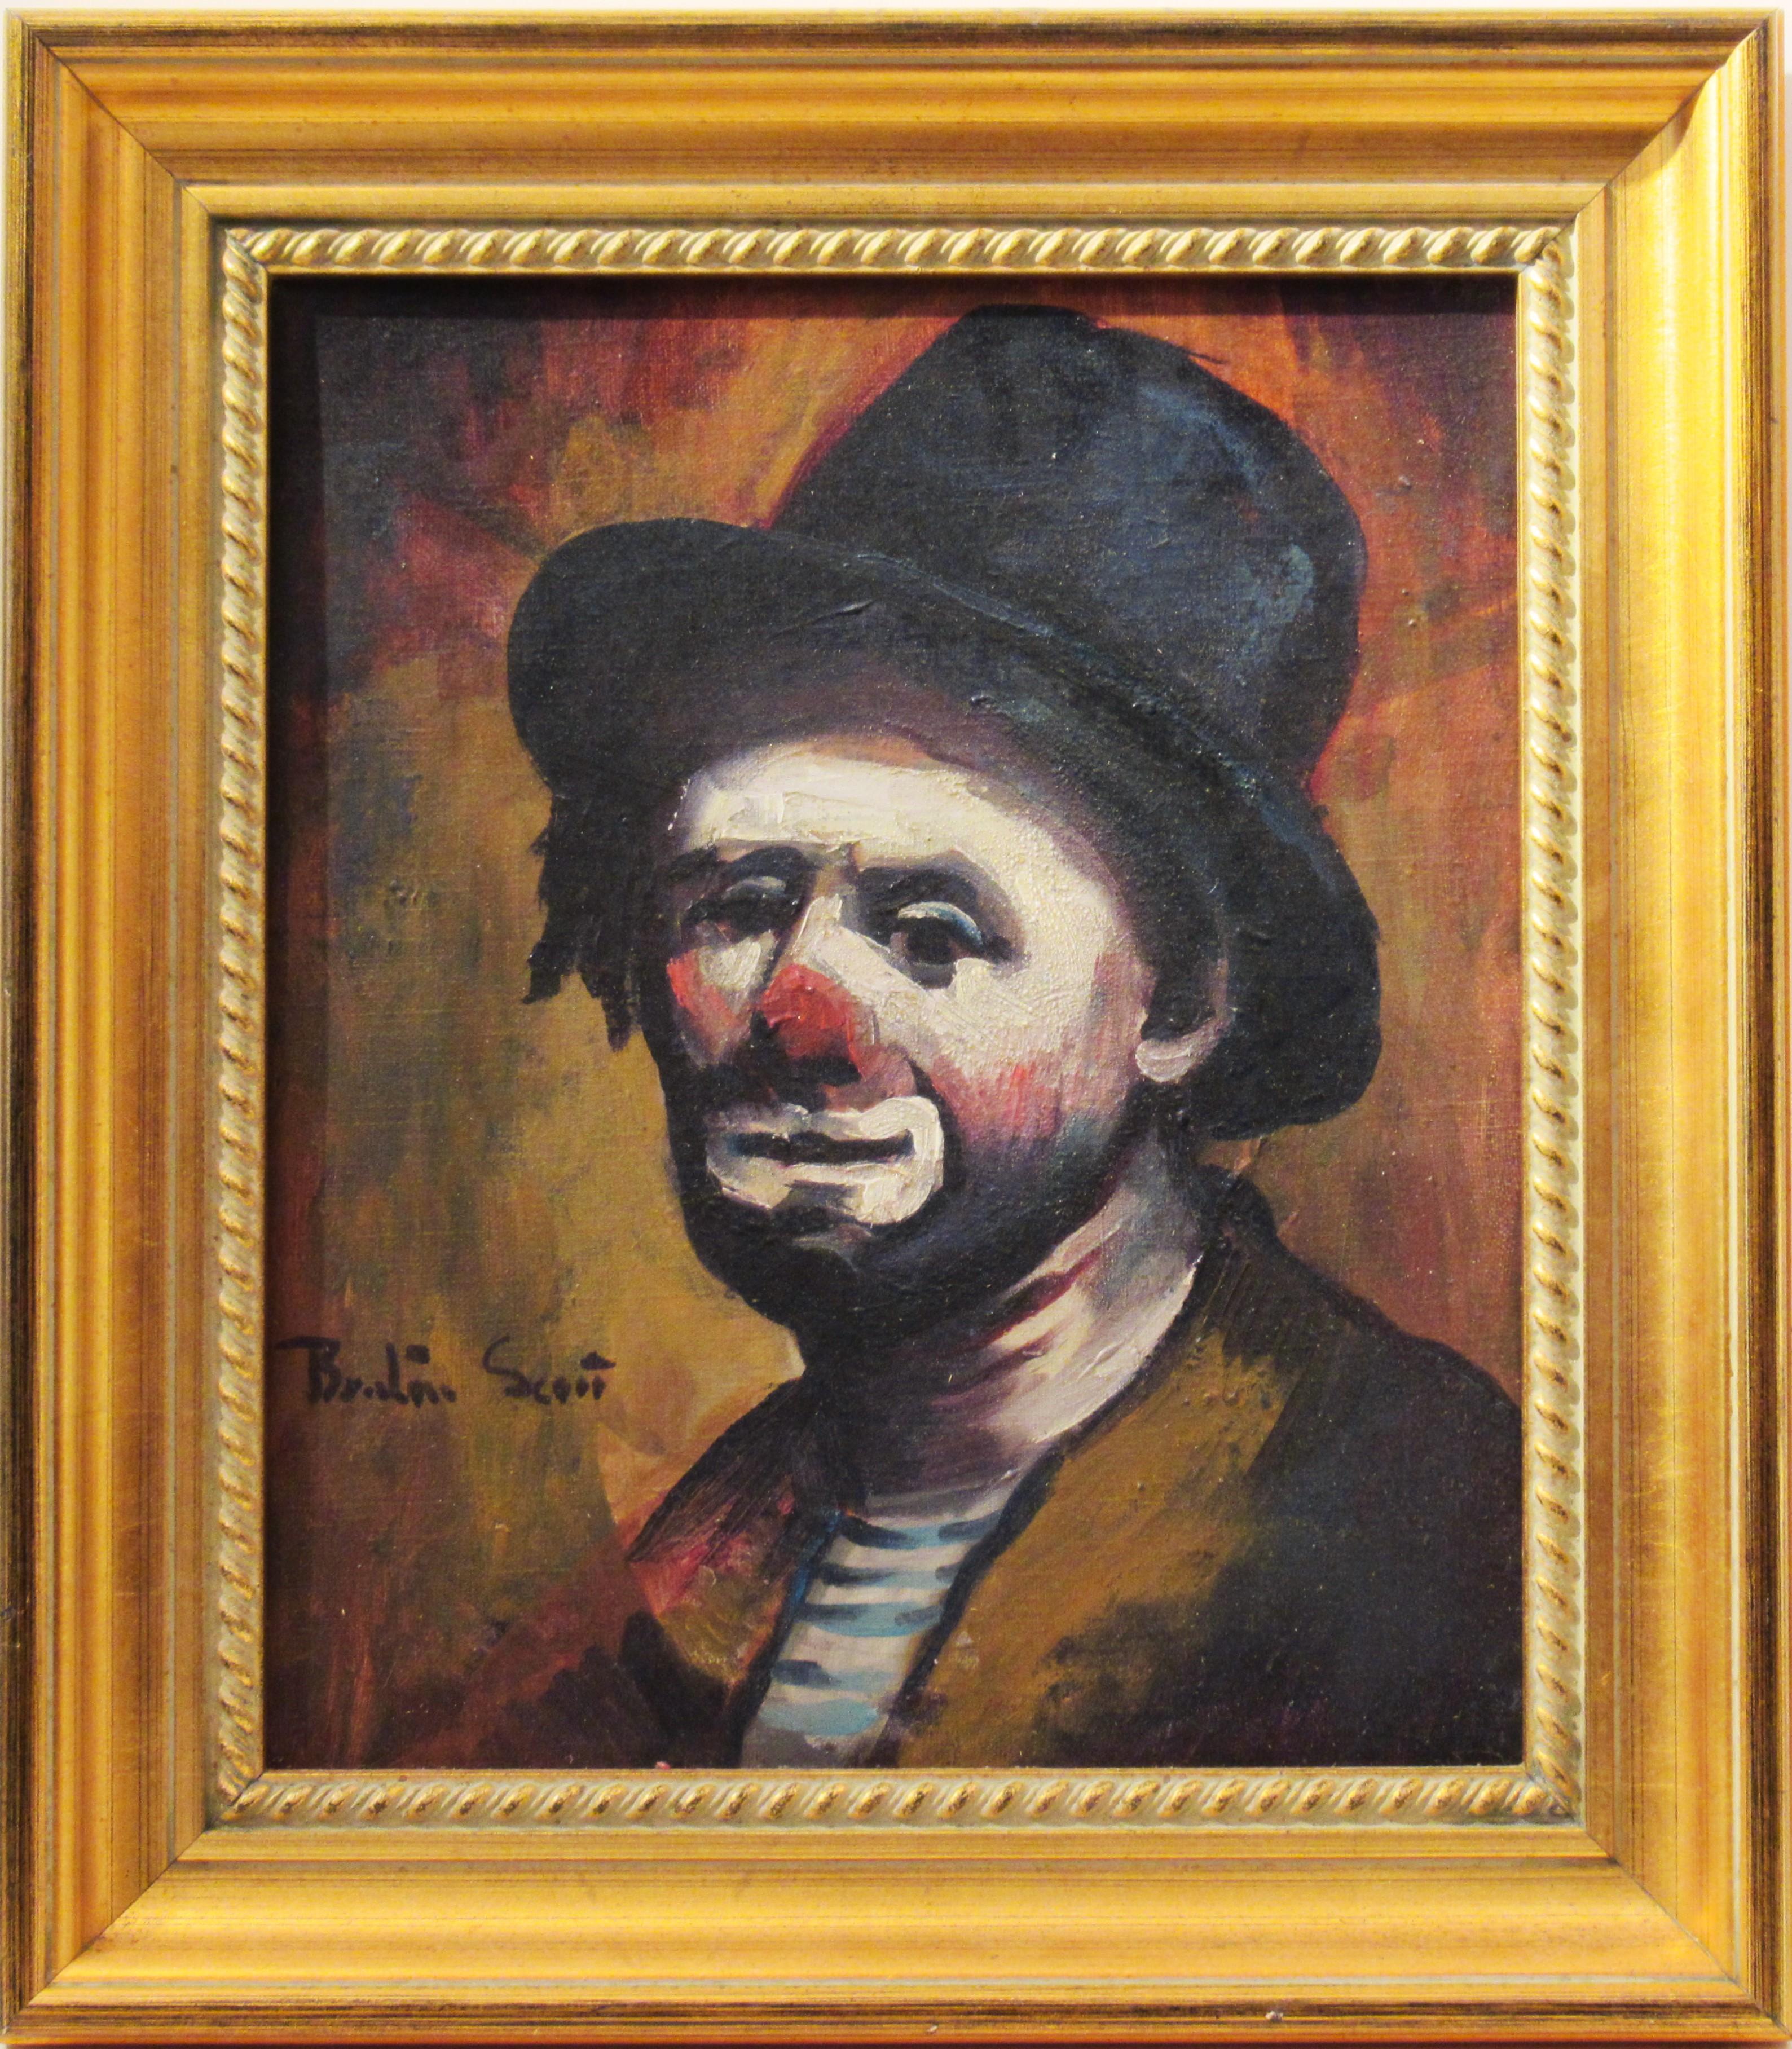 Benton Scott Figurative Painting - Clown, Medrano Circus, France